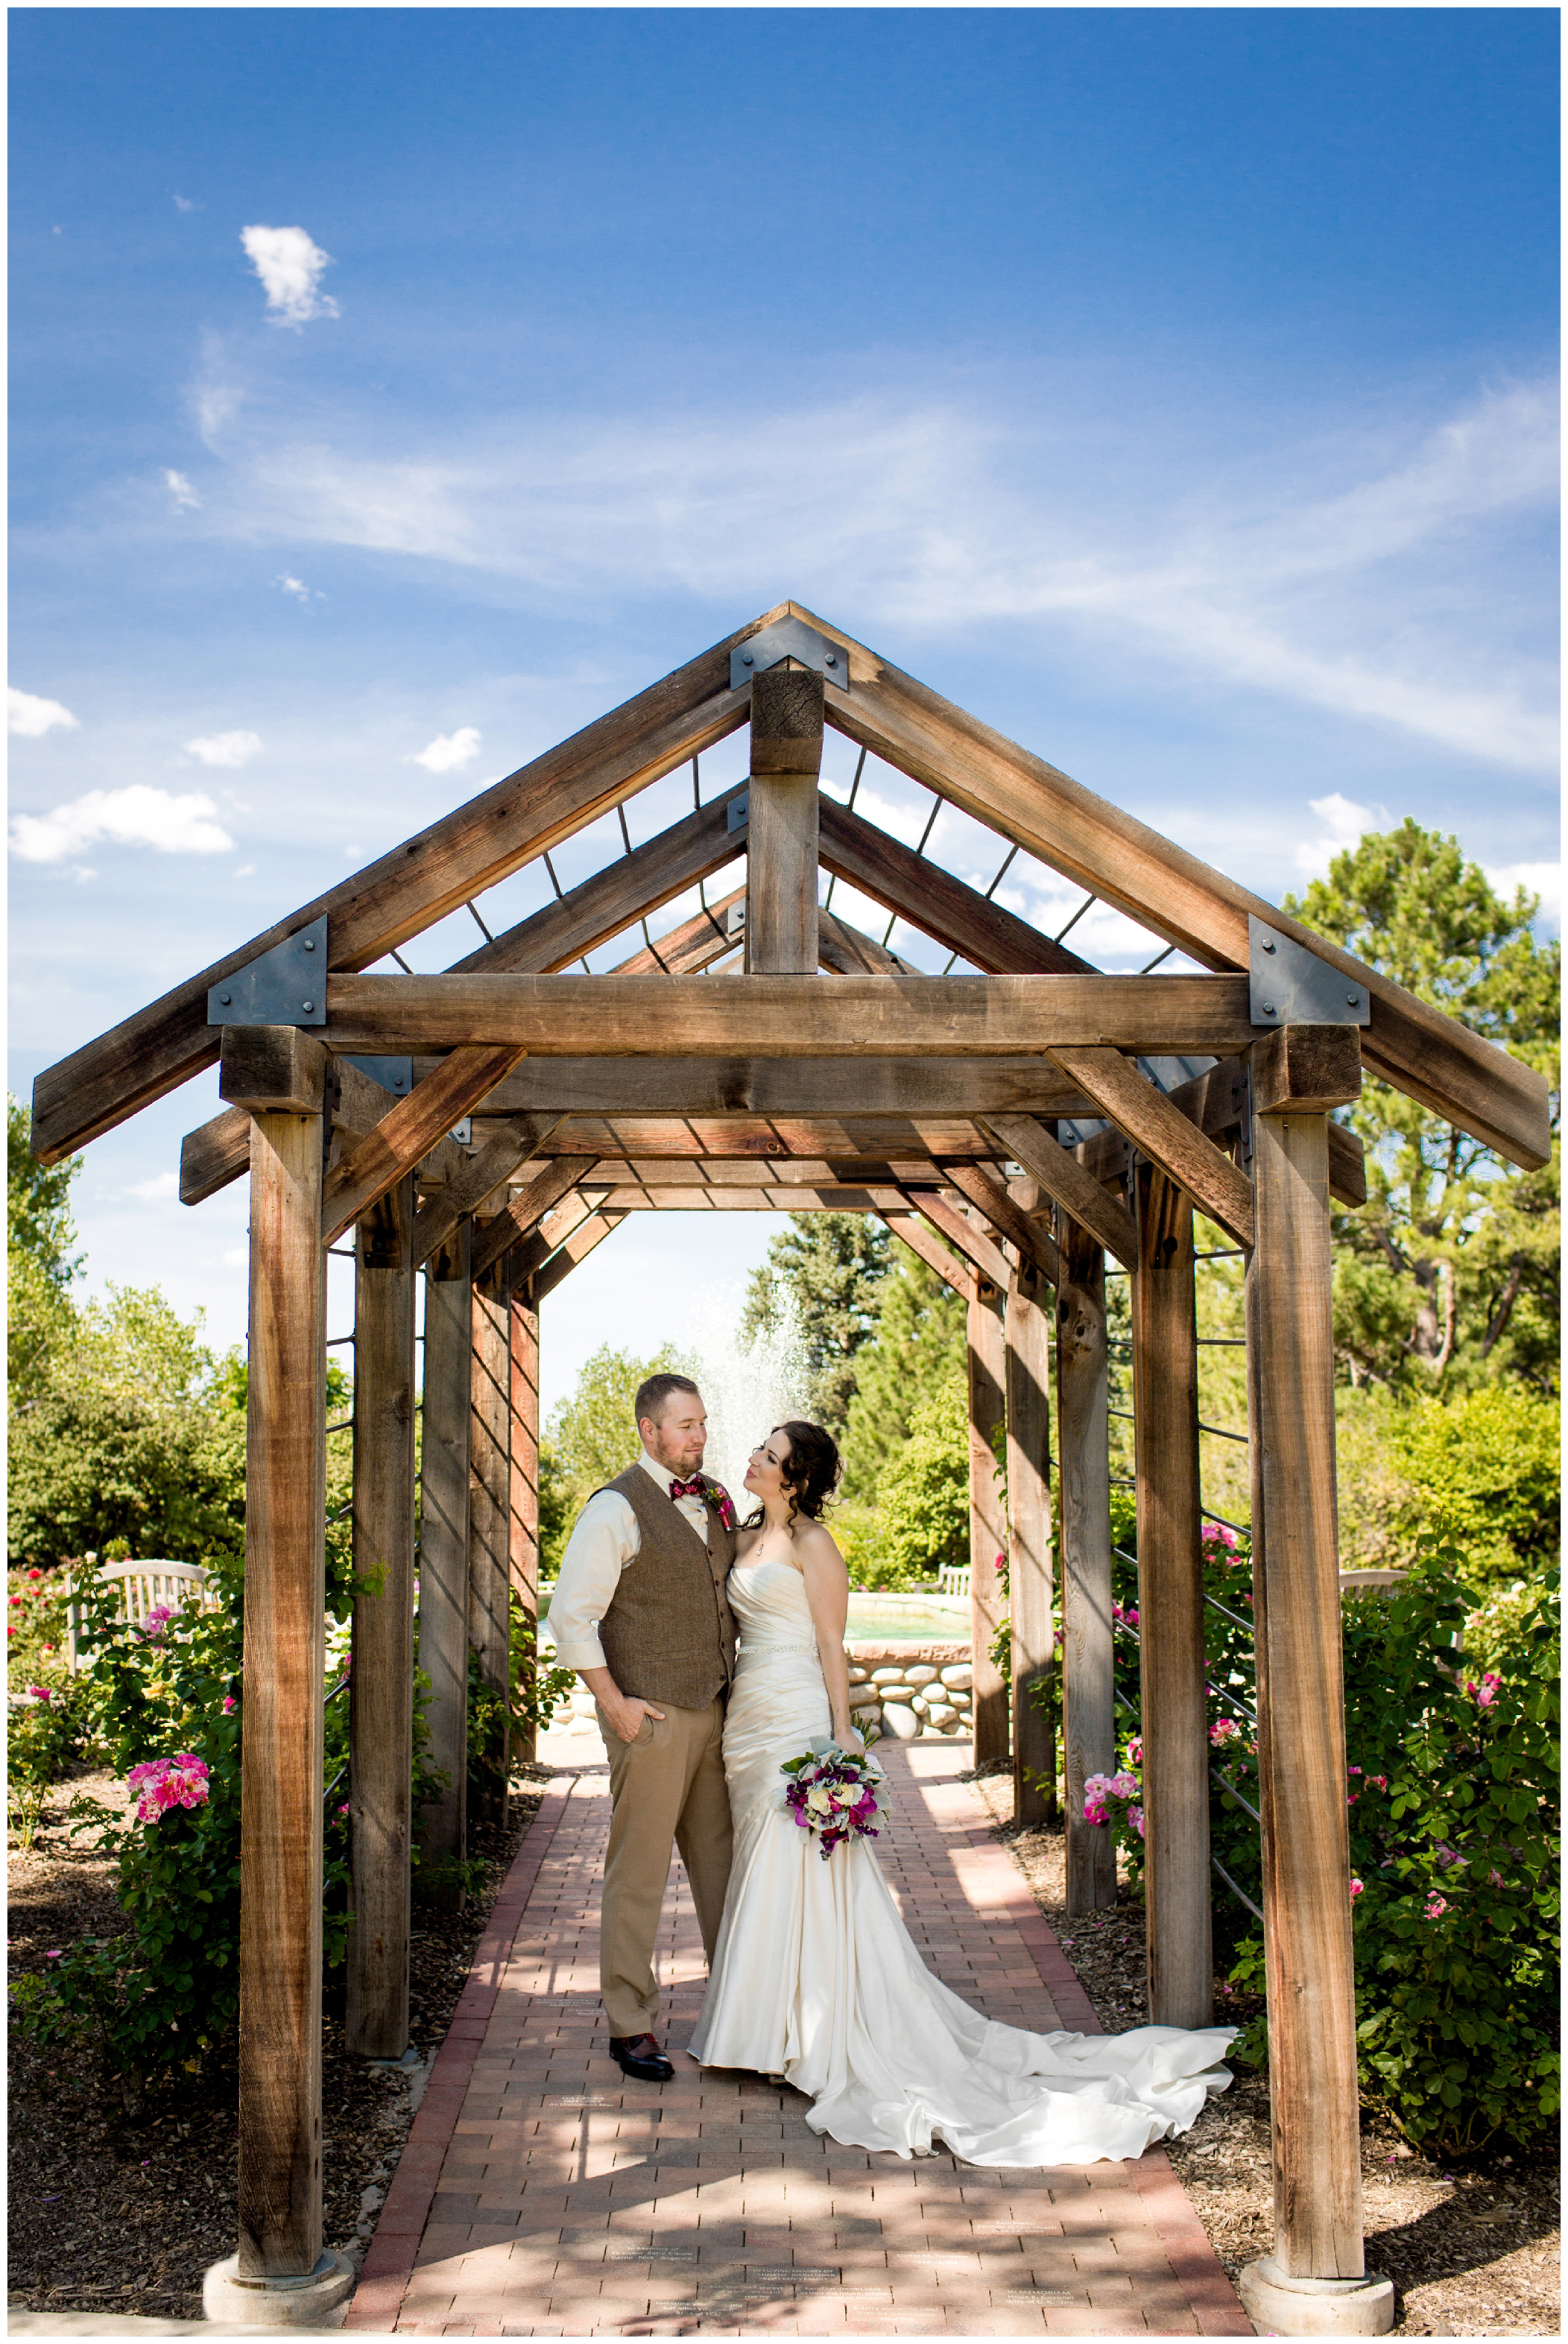 Hudson Gardens wedding photos by Colorado photographer Plum Pretty Photography